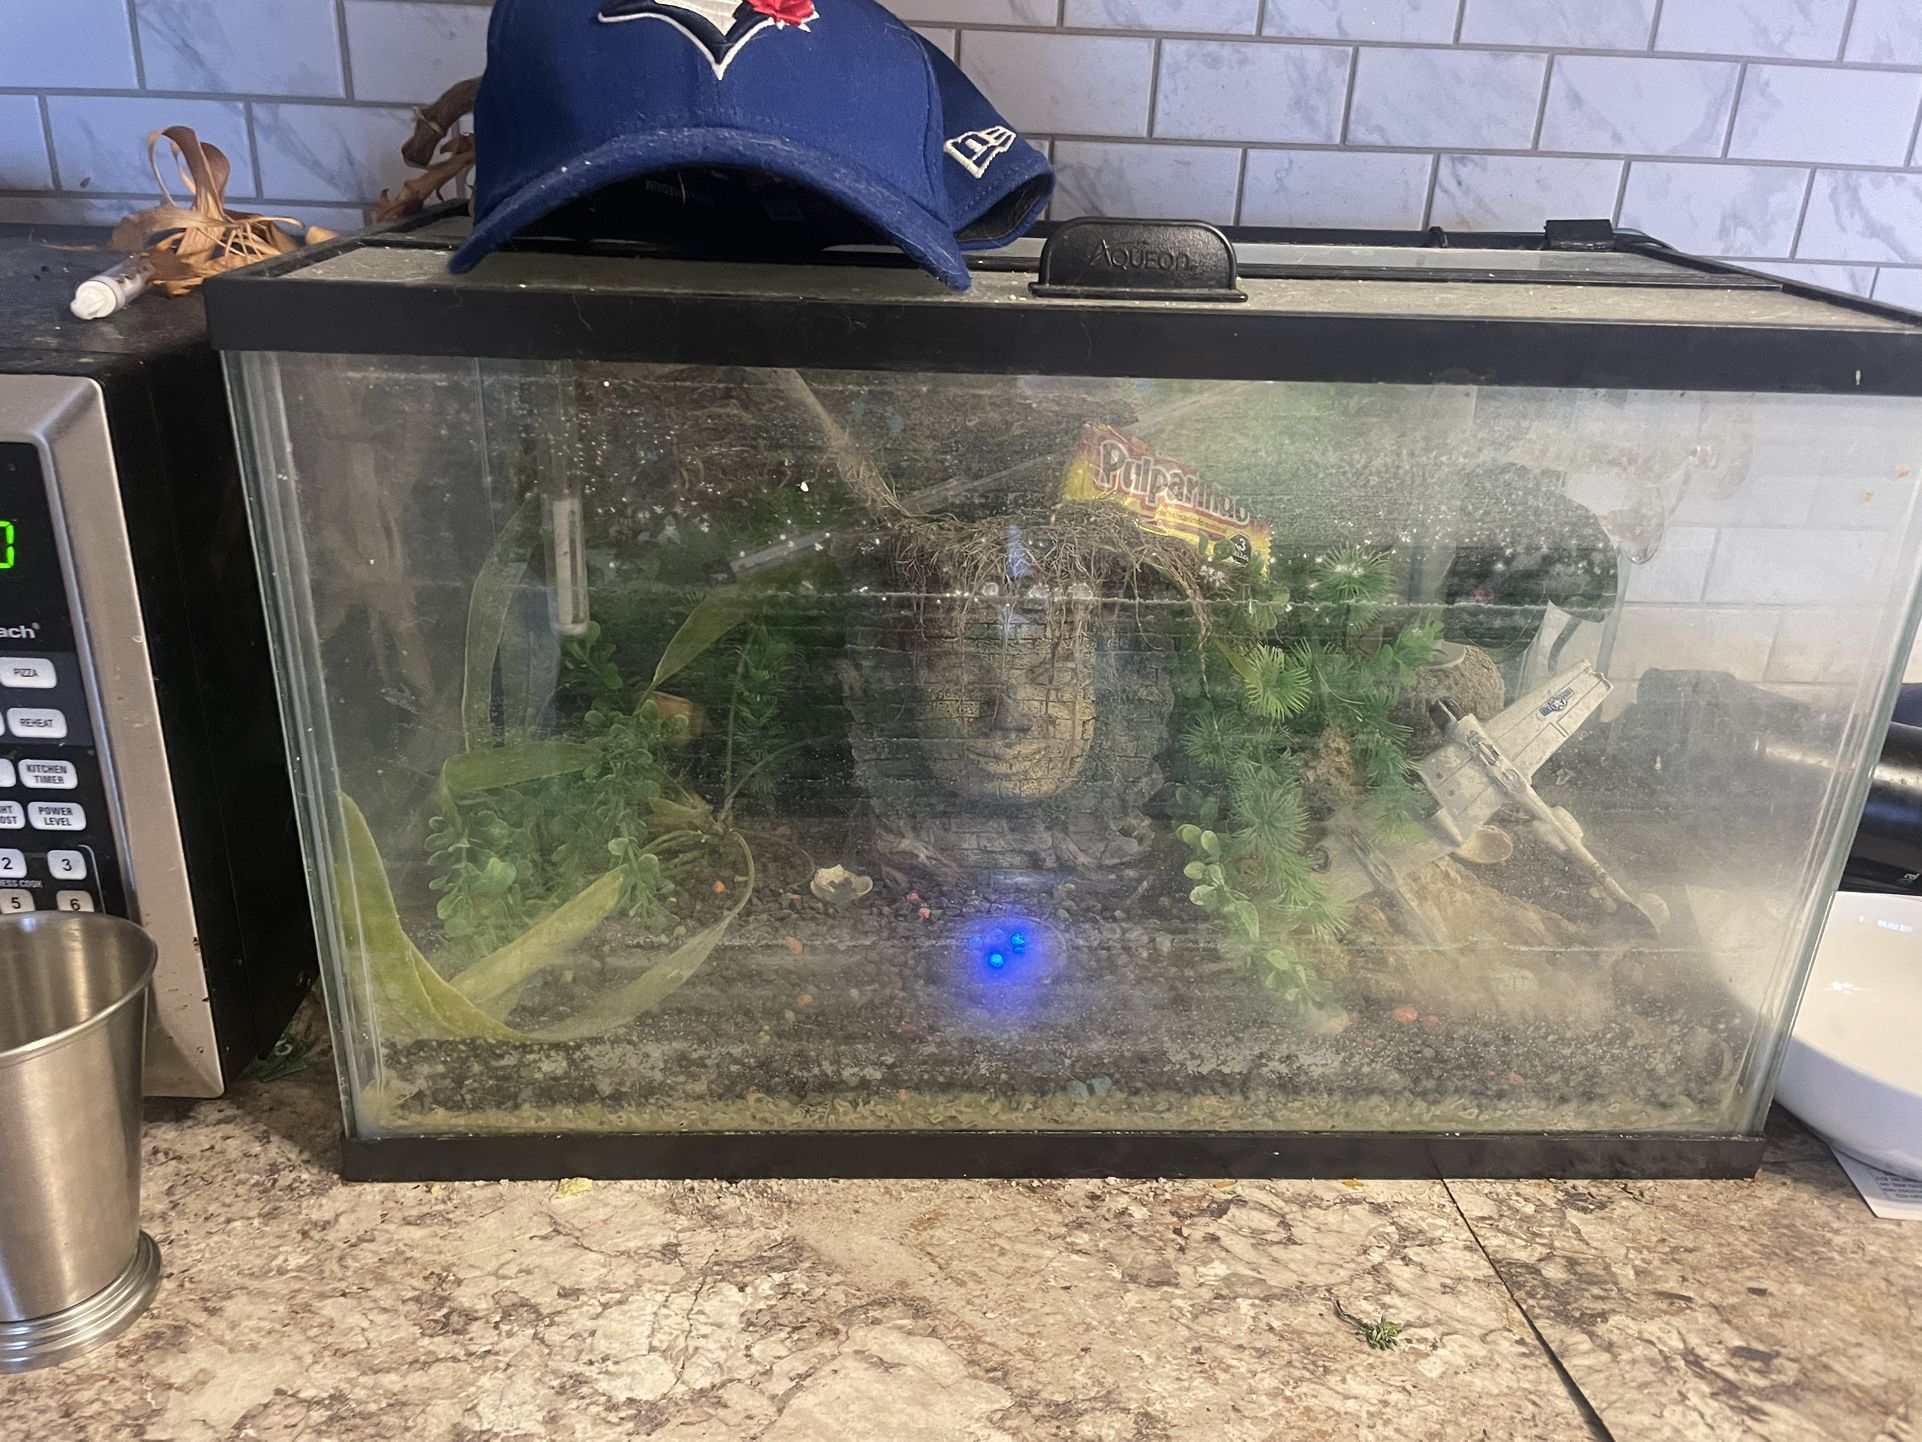 10 Gallon Fish Tank(aquarium) With Filter And Accessories!!!